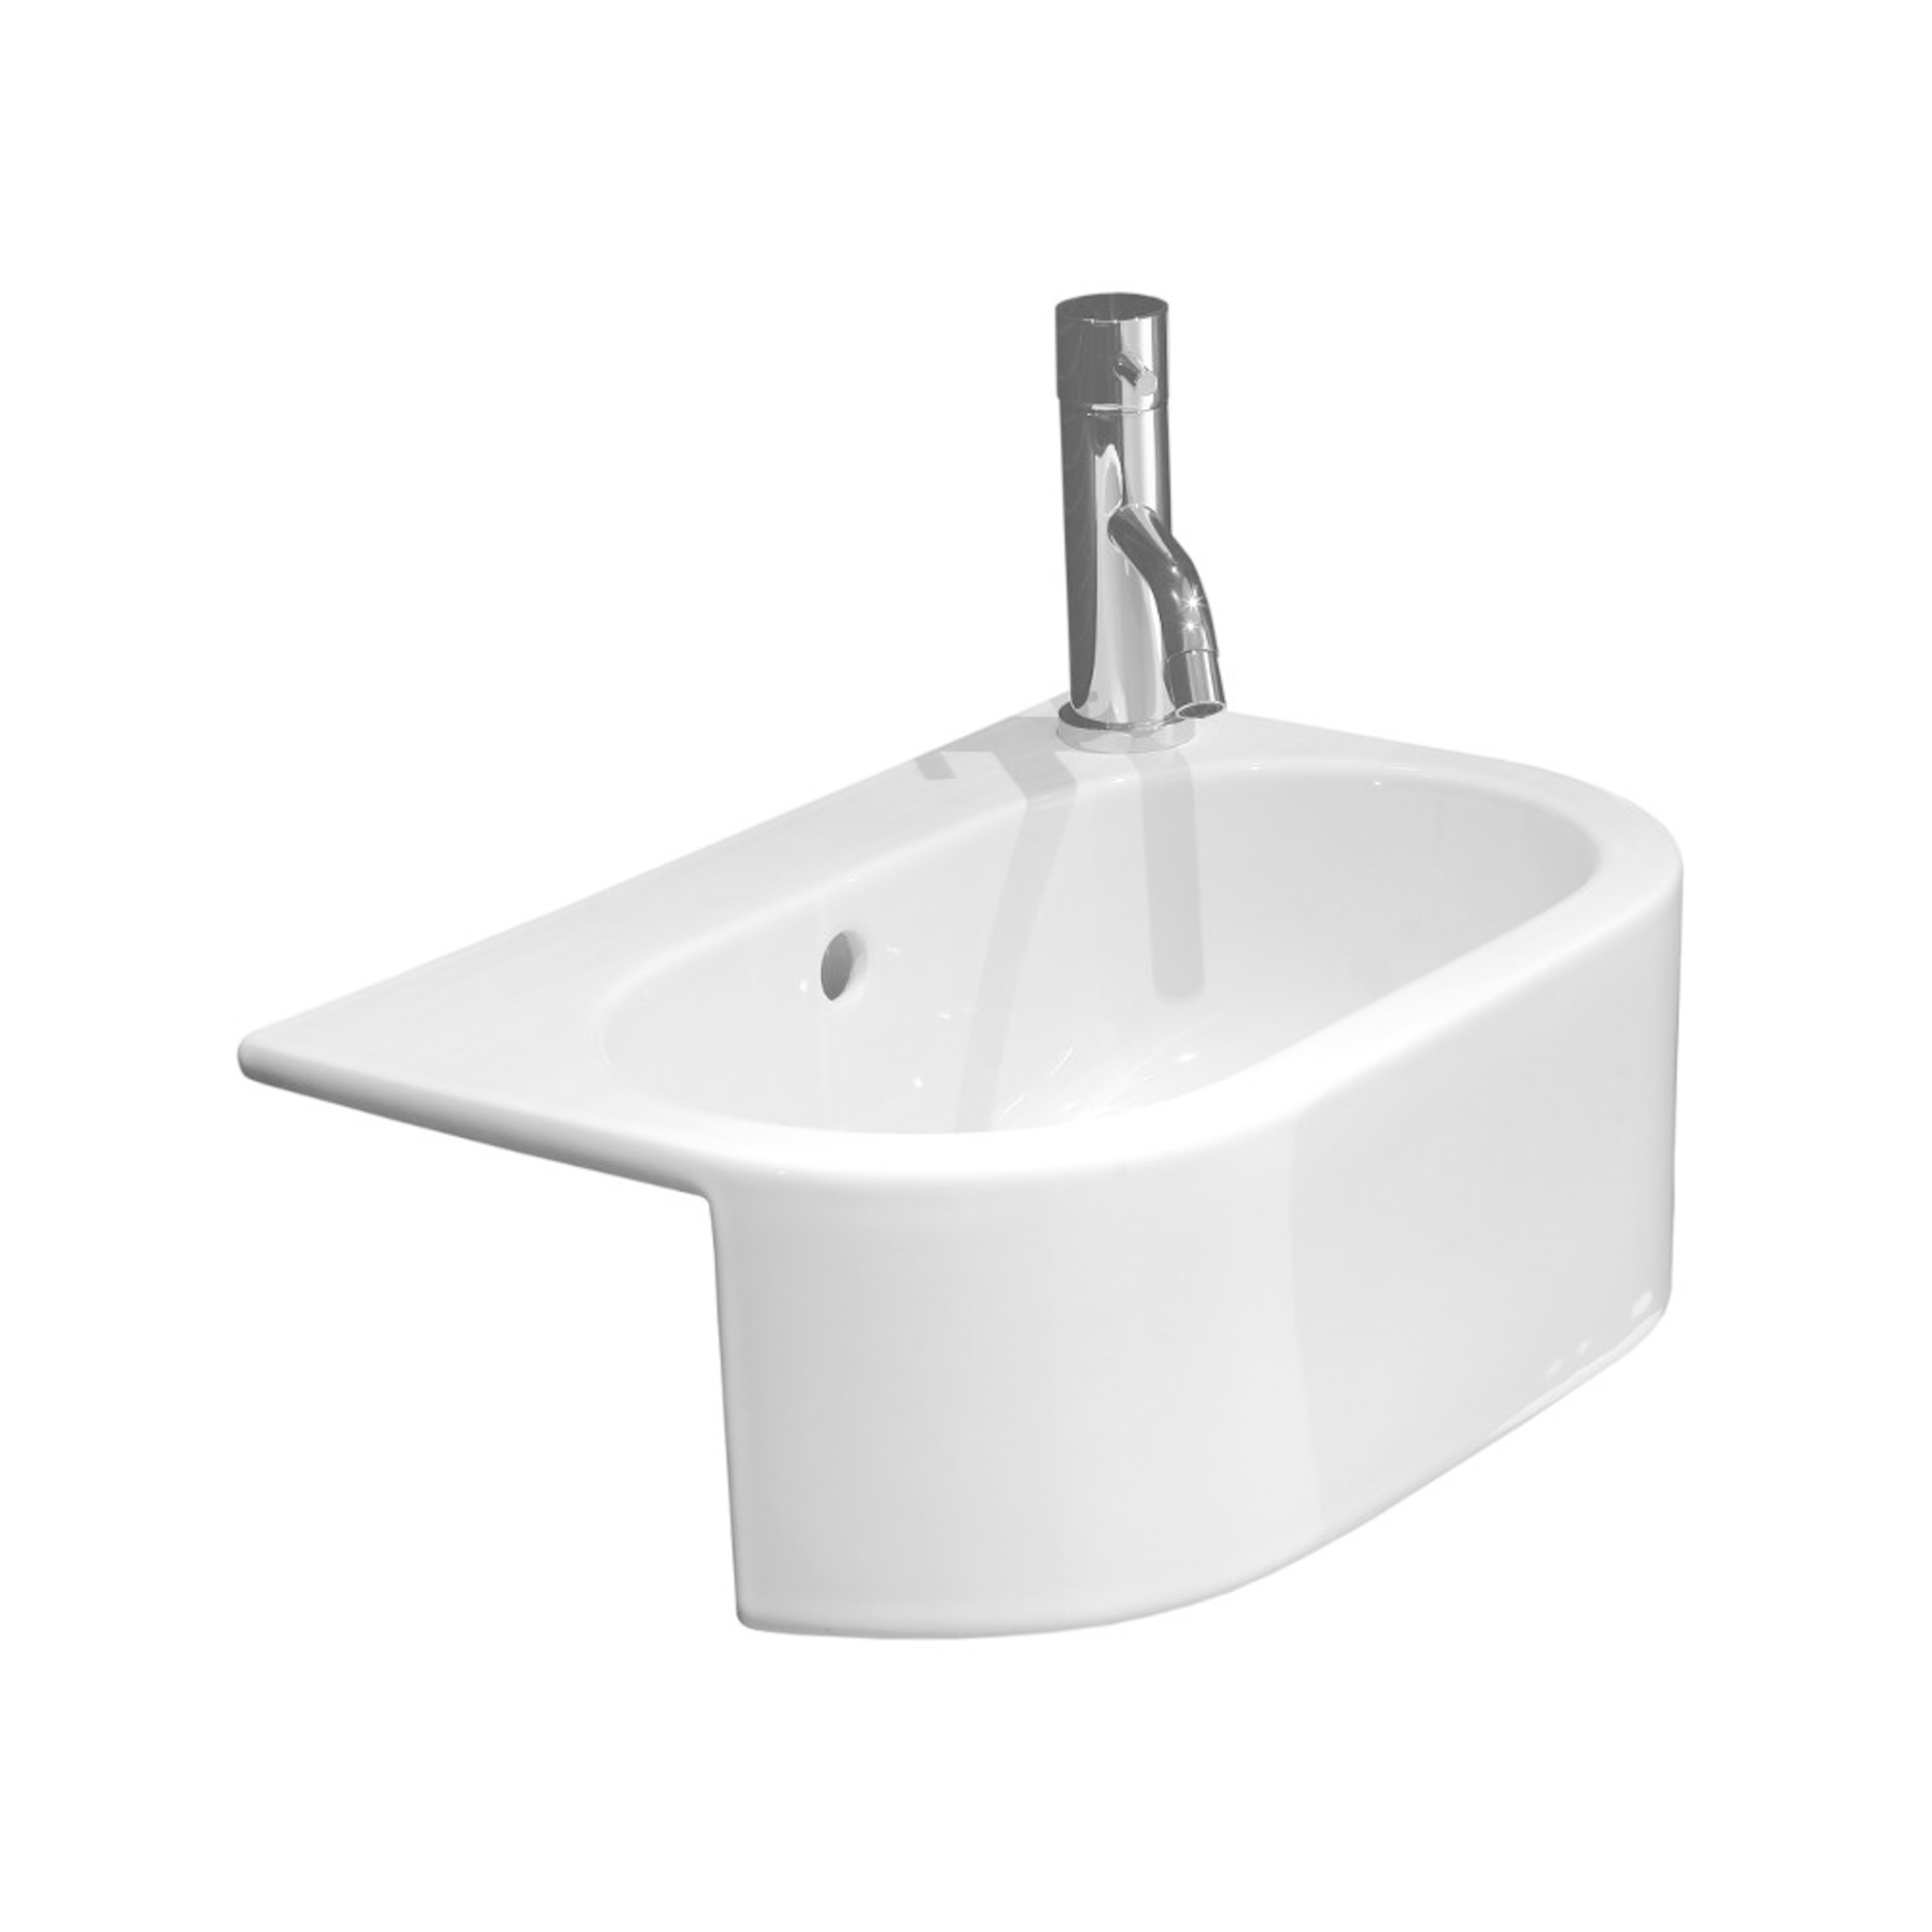 UNI 46x32cm semi-recessed washbasin left tap hole